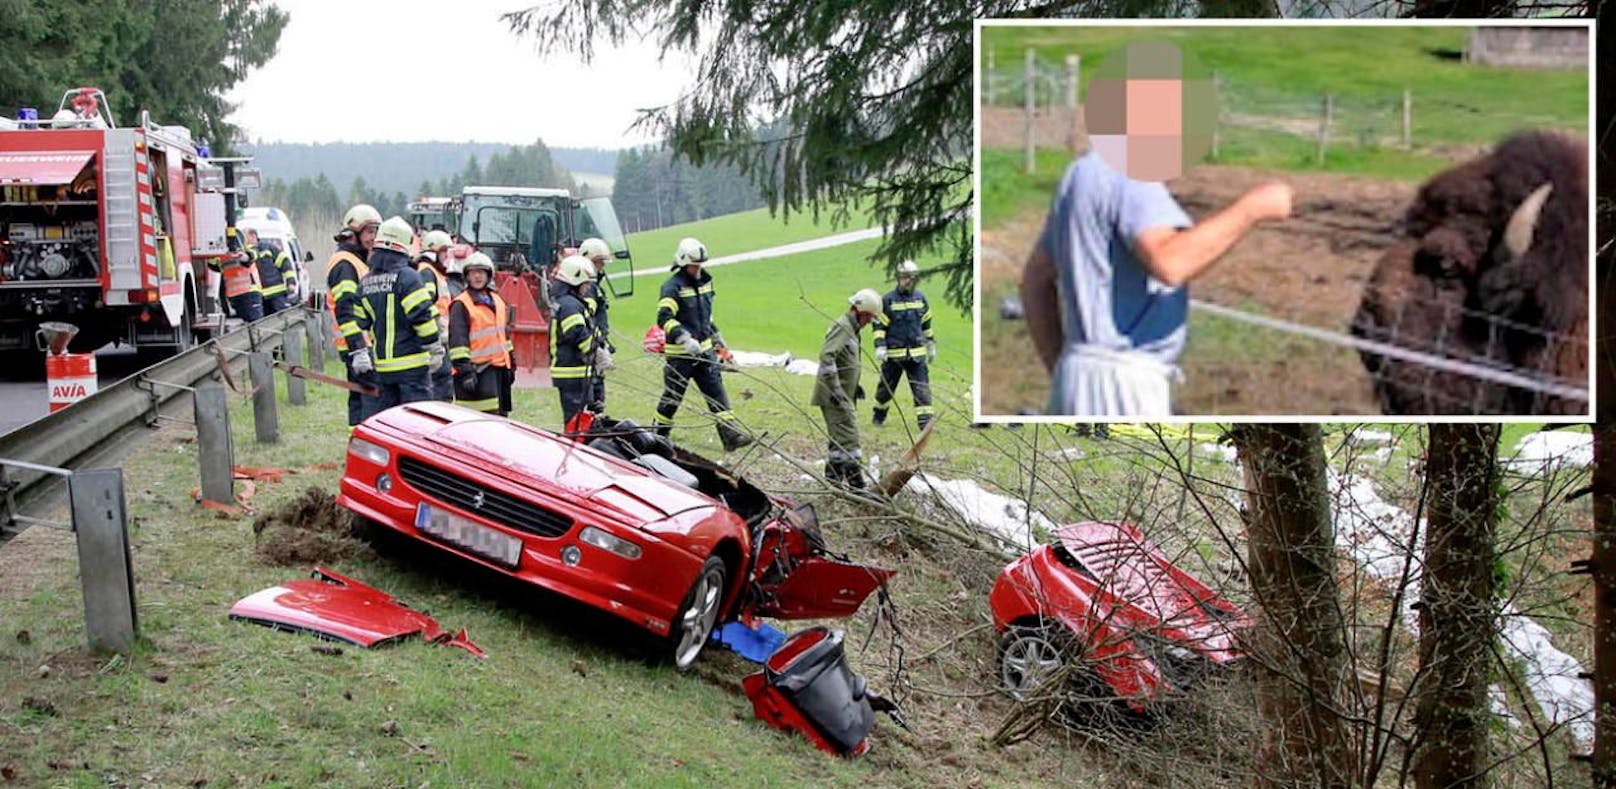 "Lauter Knall": Zeugen schildern Ferrari-Crash